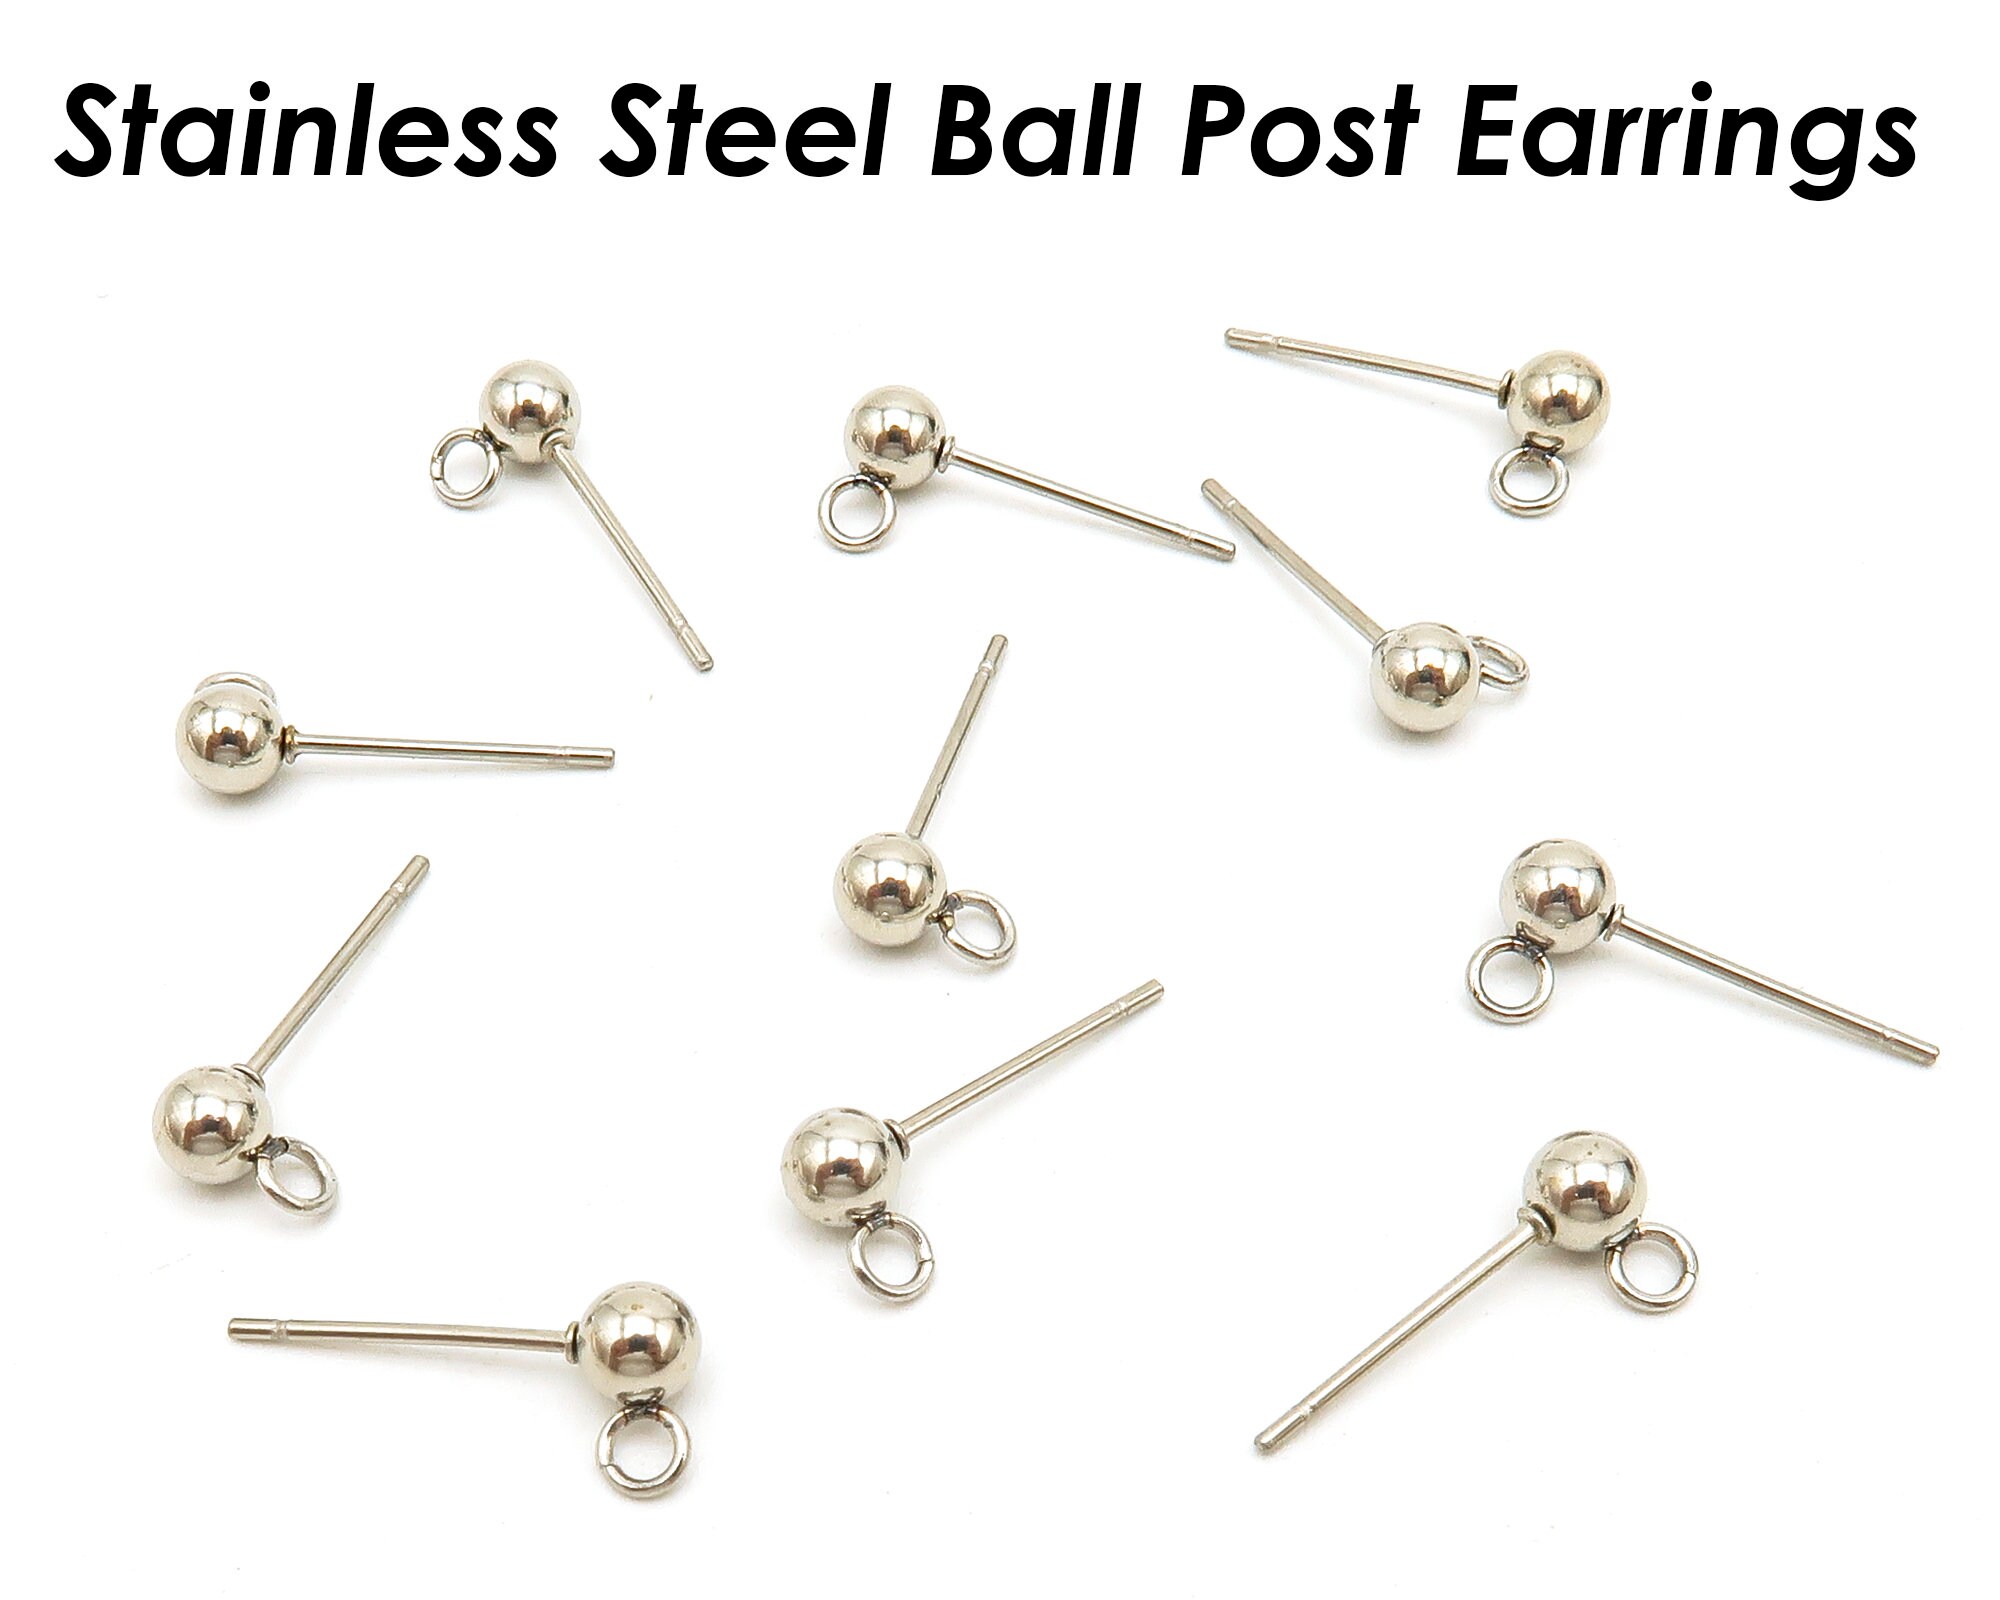 50 X Stainless Steel Earring Gold Silver, Surgical Steel Earrings Hooks,  Bulk Hypoallergenic Earring Wires Tarnish Free 